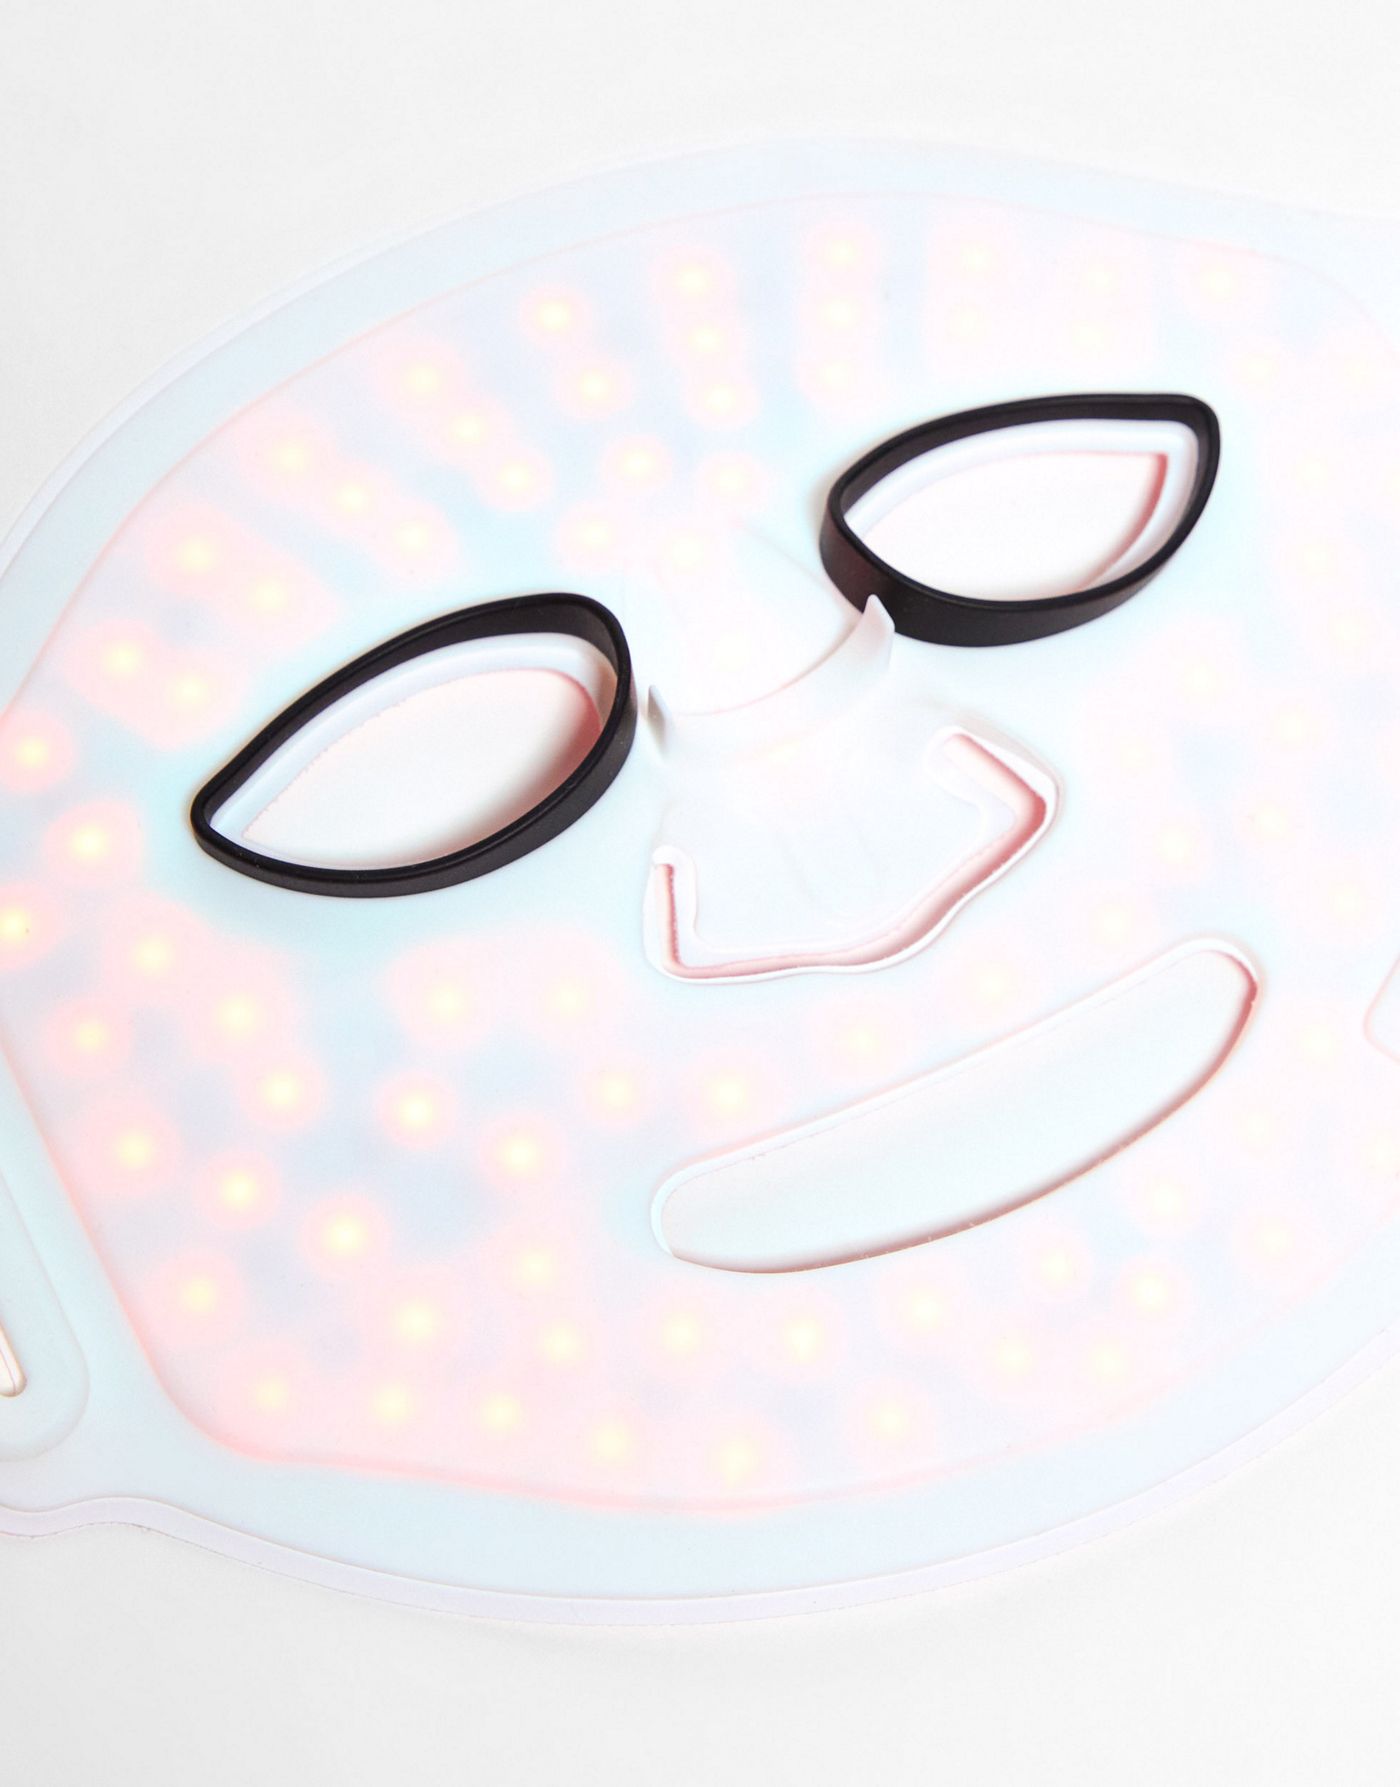 SENSSE Professional LED Silicone Face Mask Device